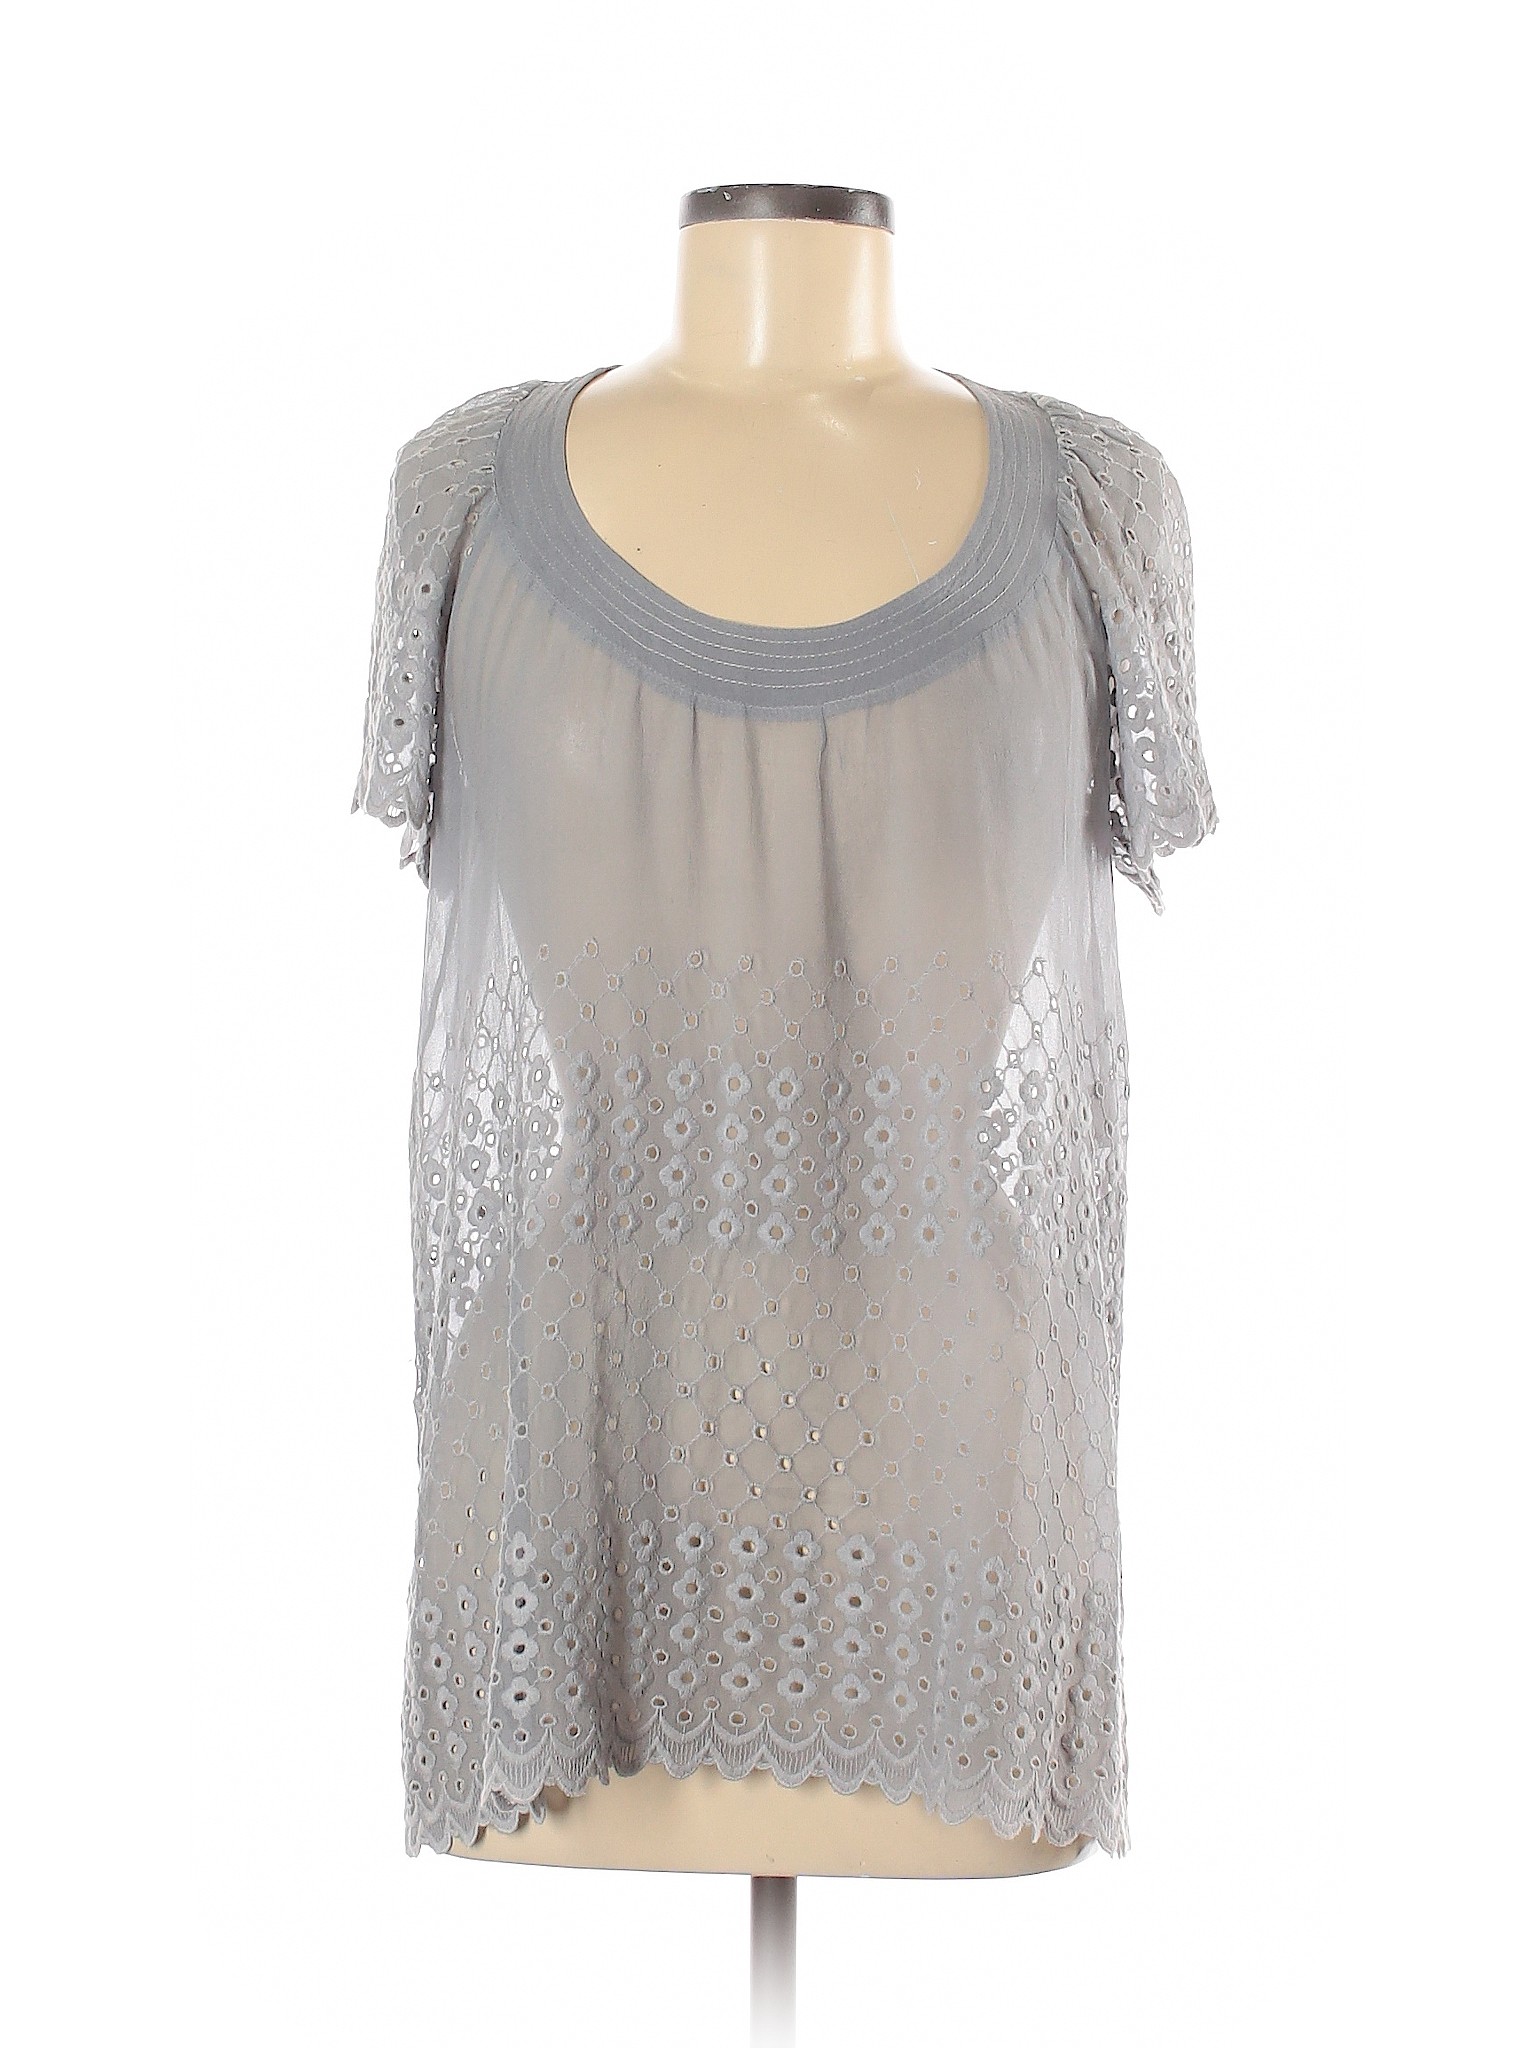 Sandro Women Gray Short Sleeve Silk Top M | eBay